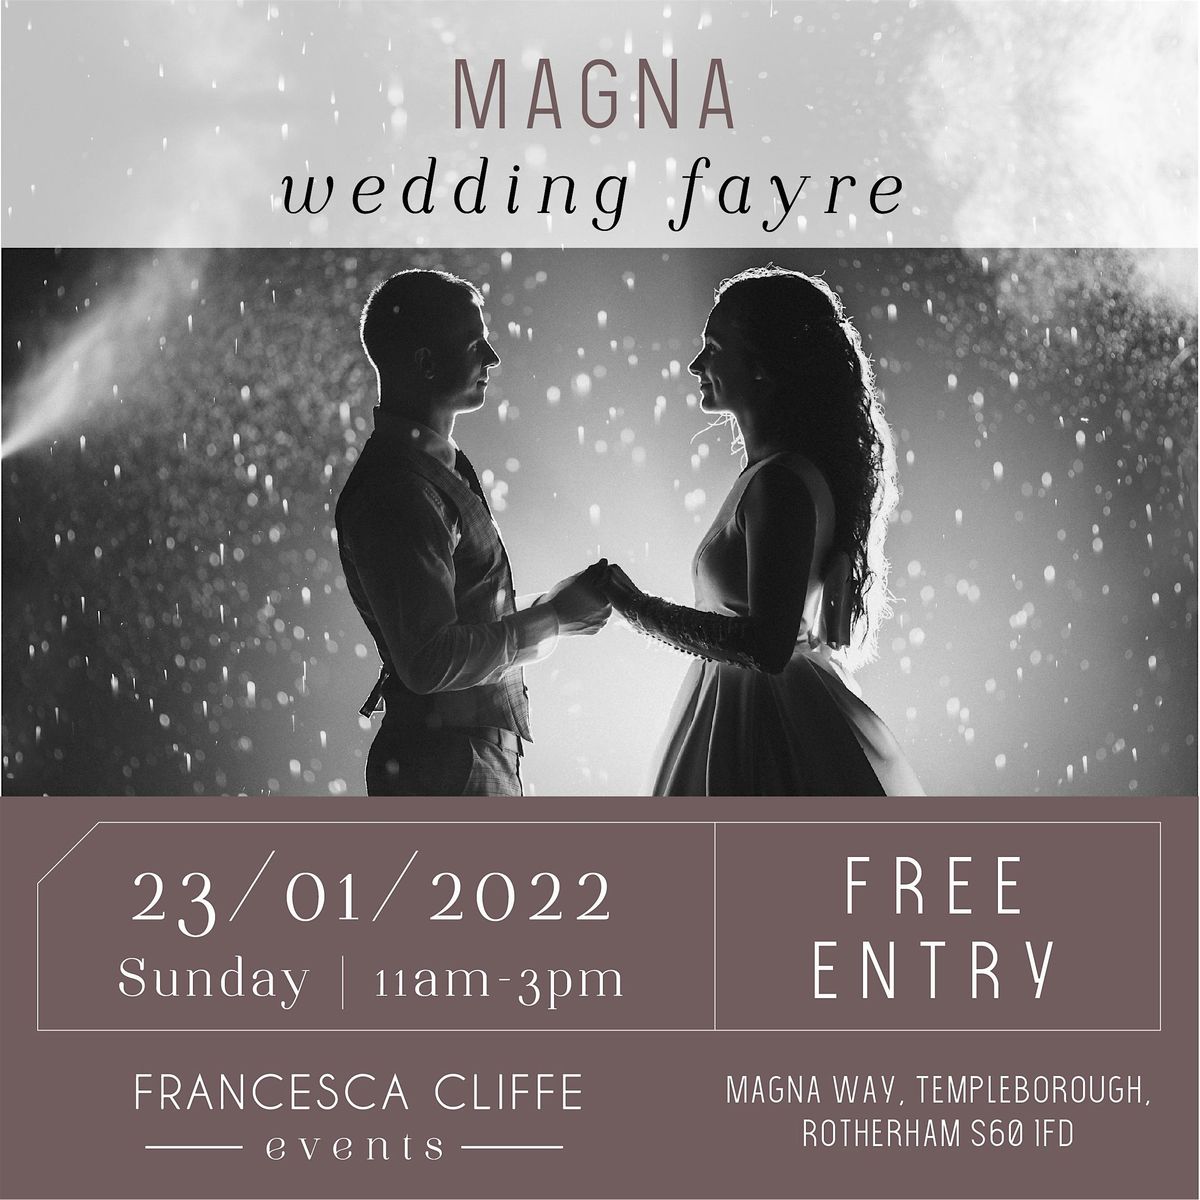 Magna wedding fayre